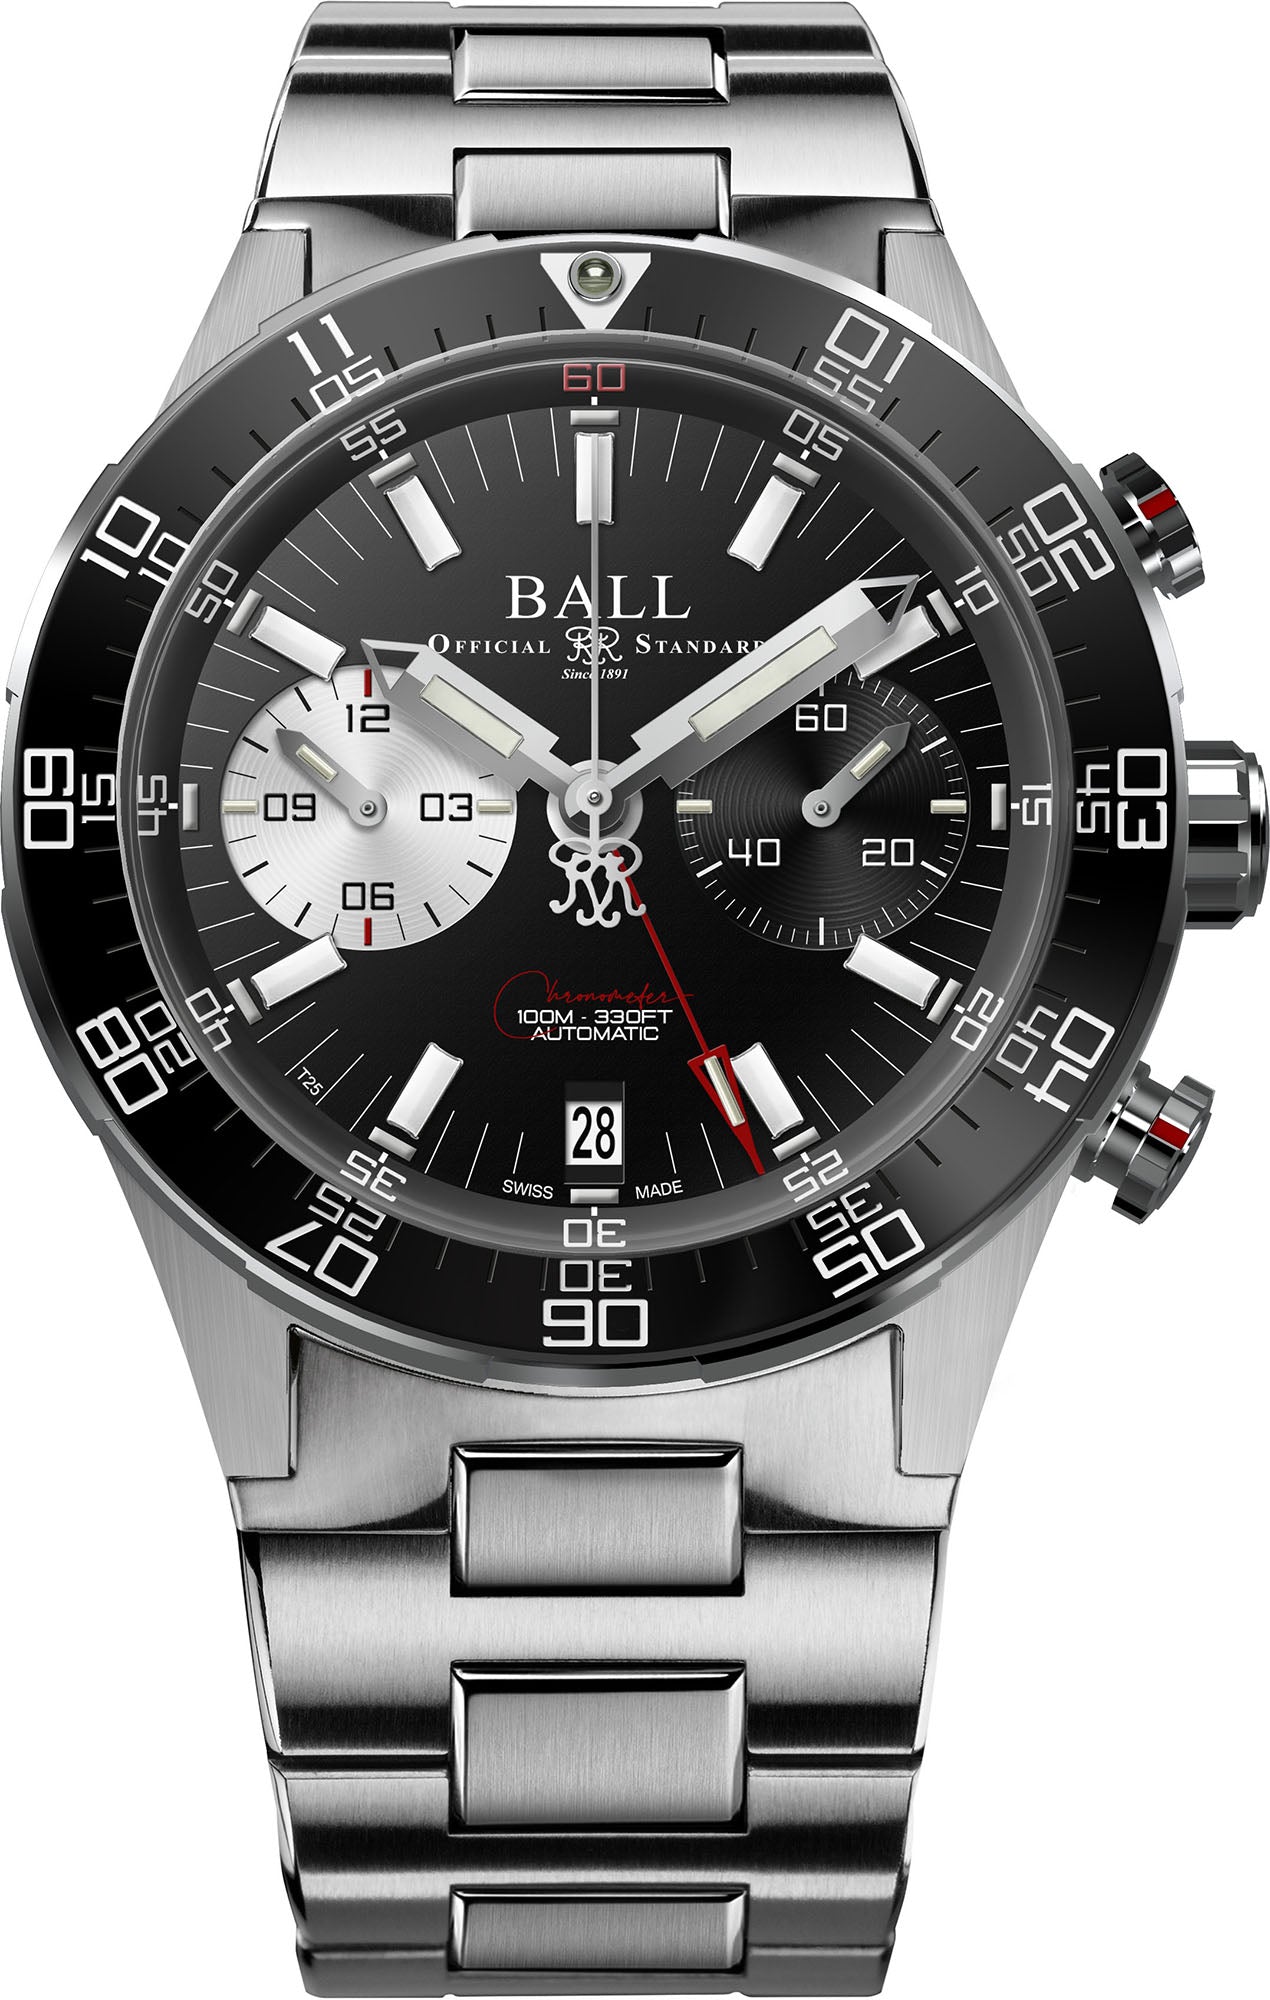 Photos - Wrist Watch Ball Watch Company Roadmaster M Chronograph Limited Edition BL-2525 